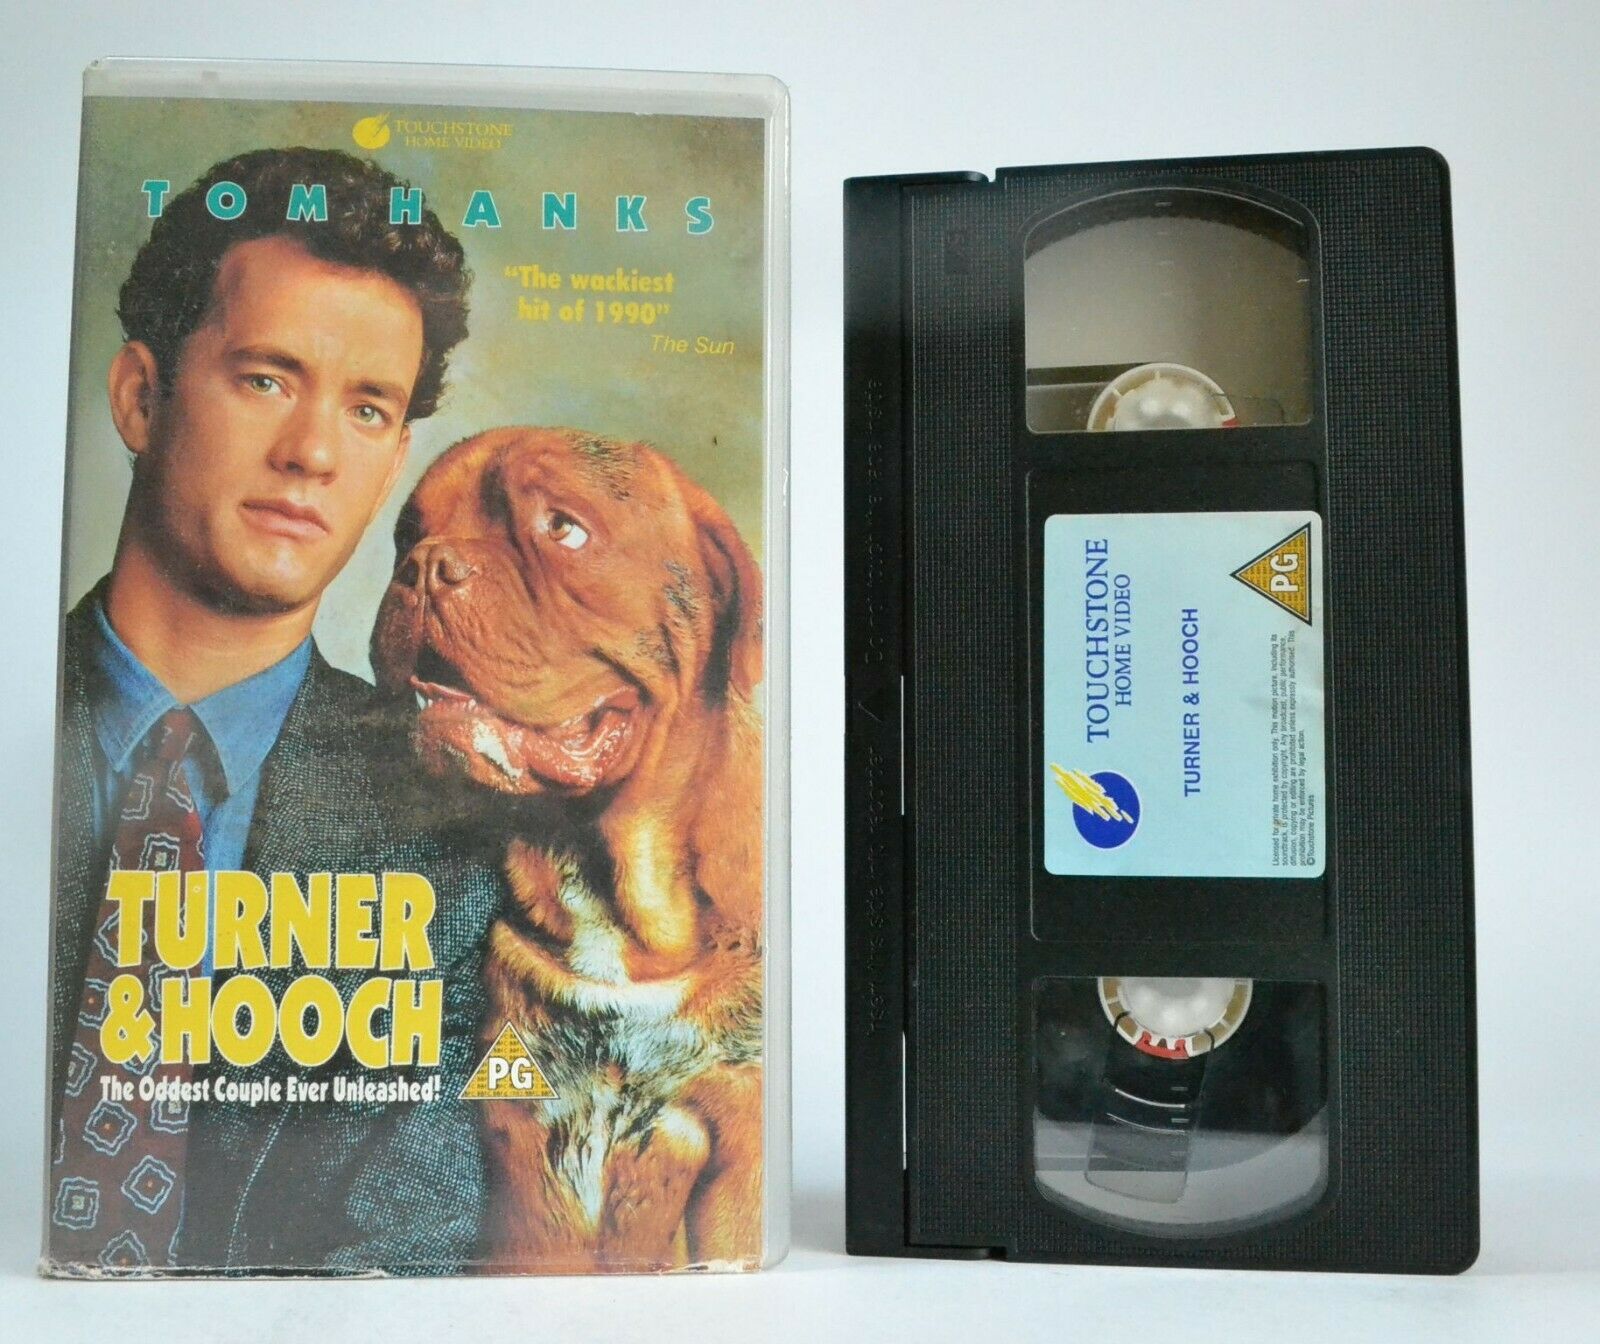 Turner & Hooch (1989): Buddy Cop Comedy - Beasley The Dog - Tom Hanks - Pal VHS-